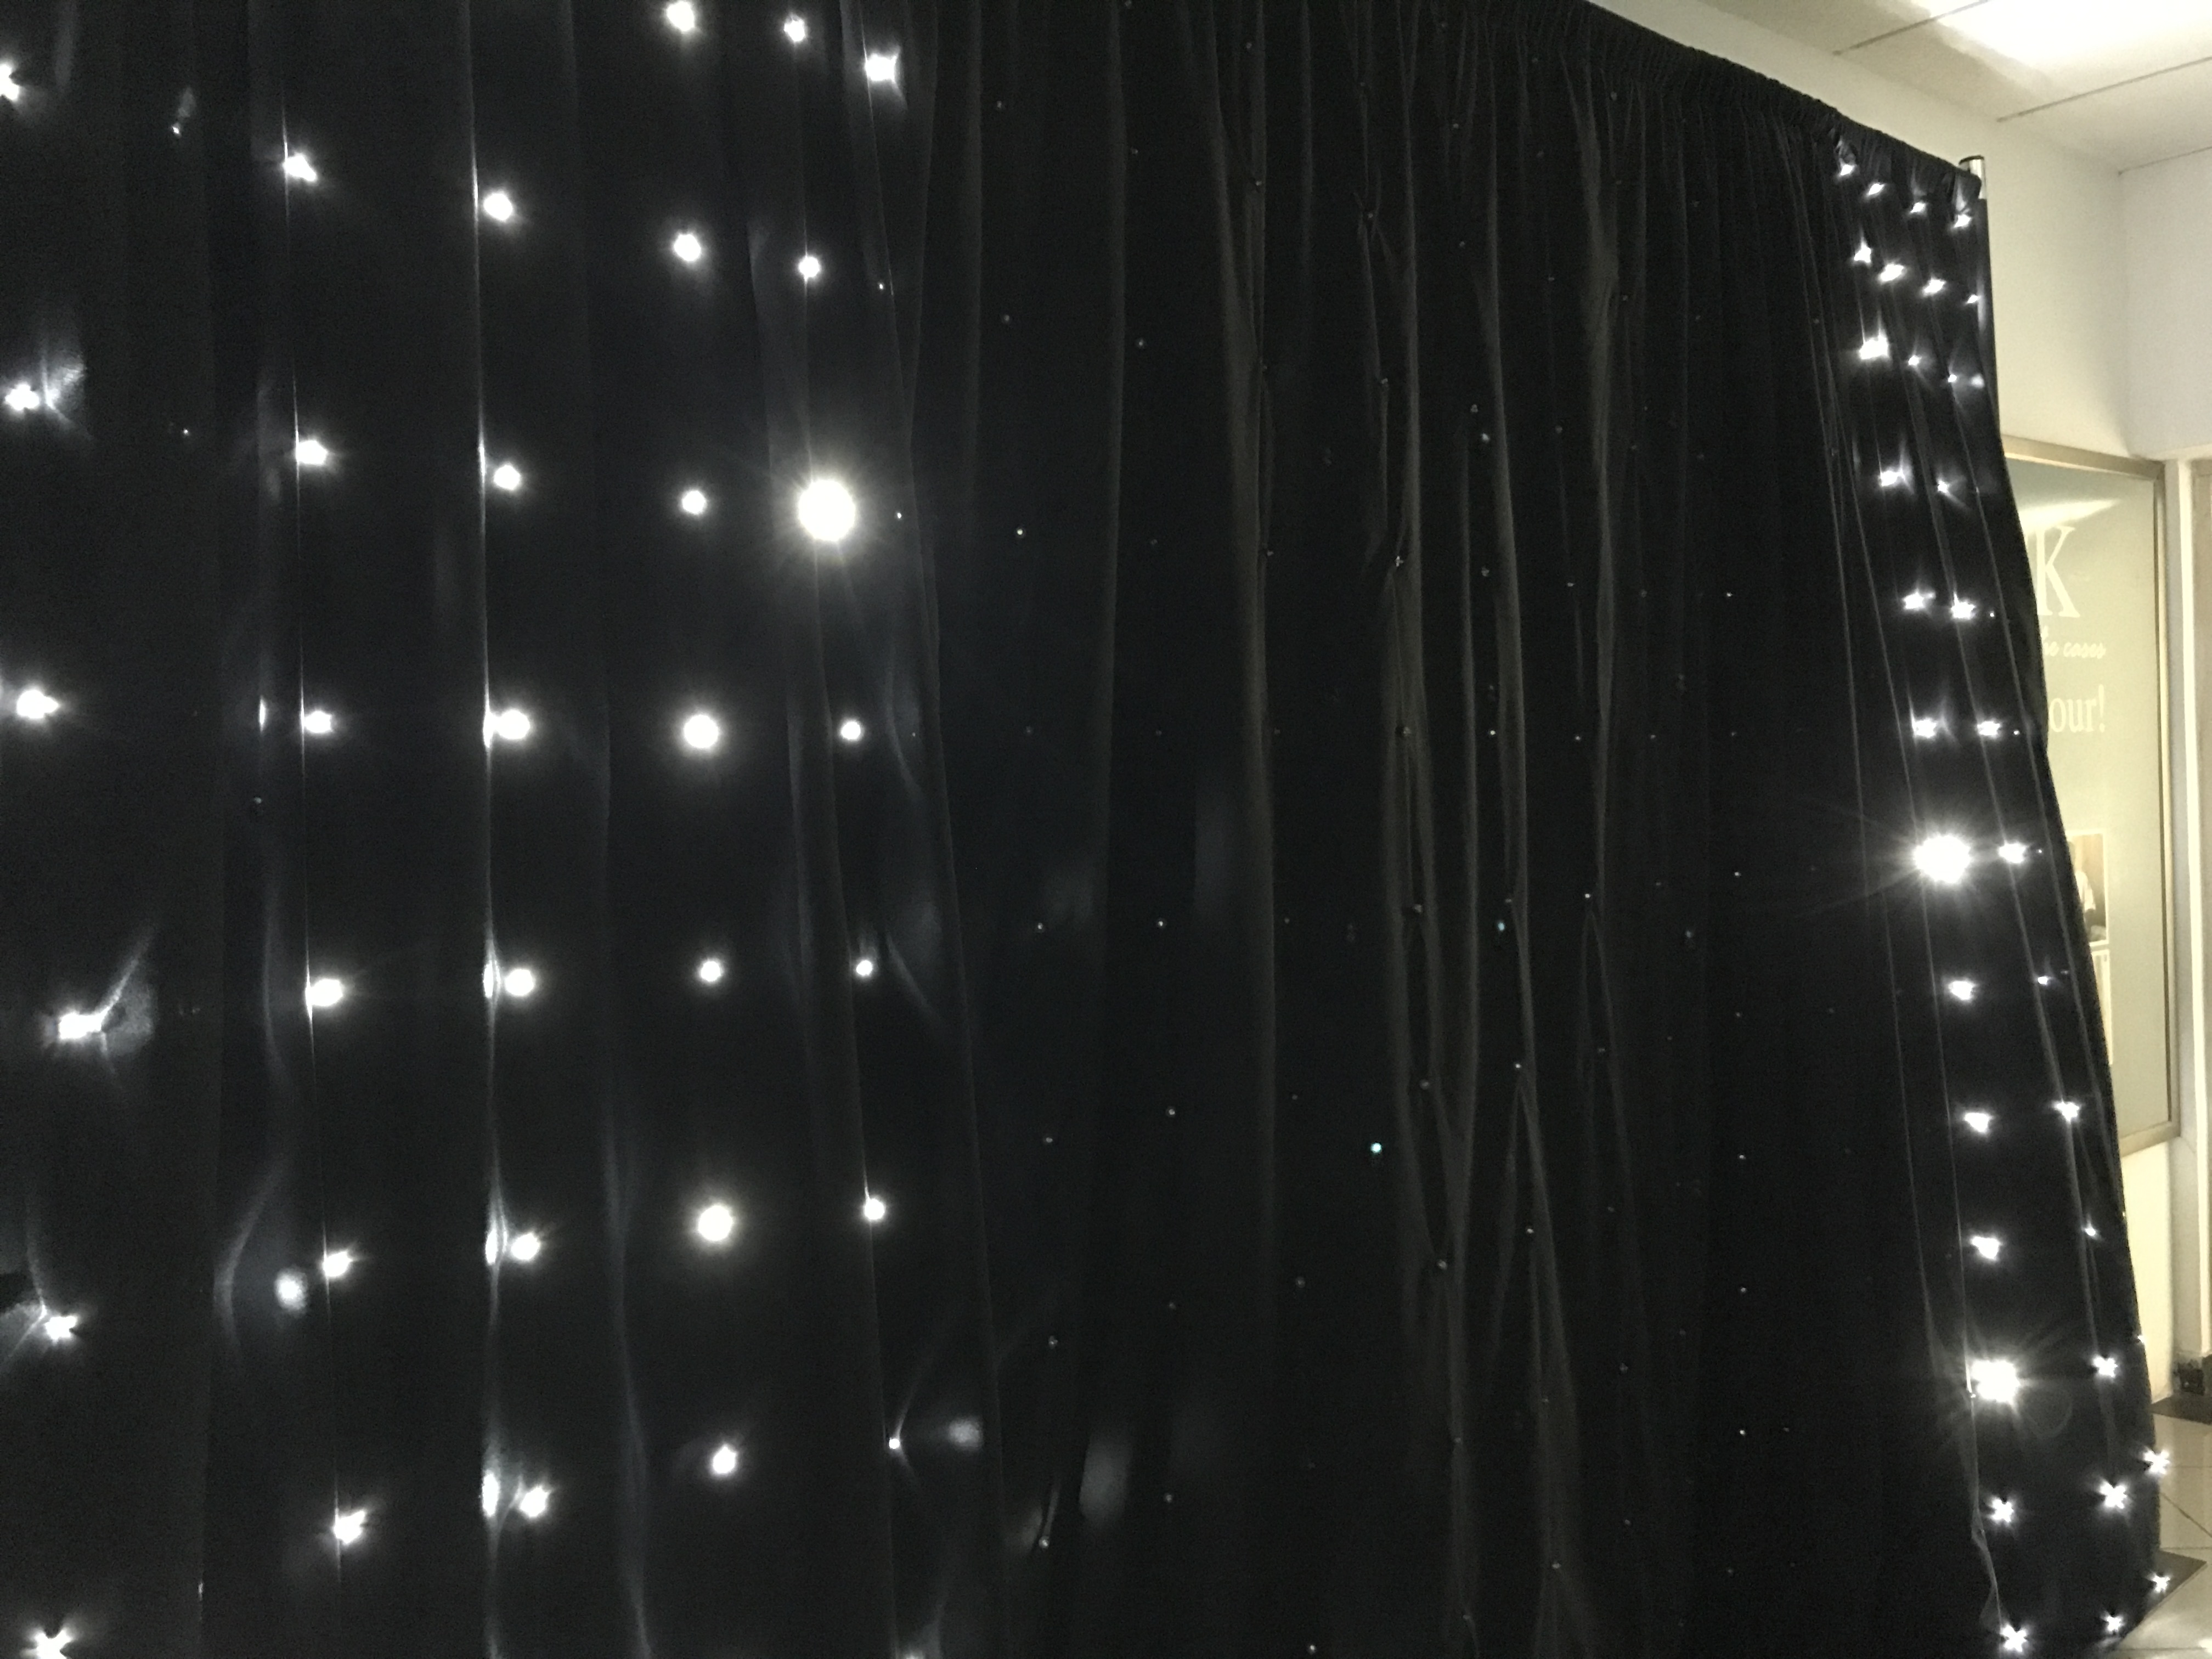 RK LED star curtains show